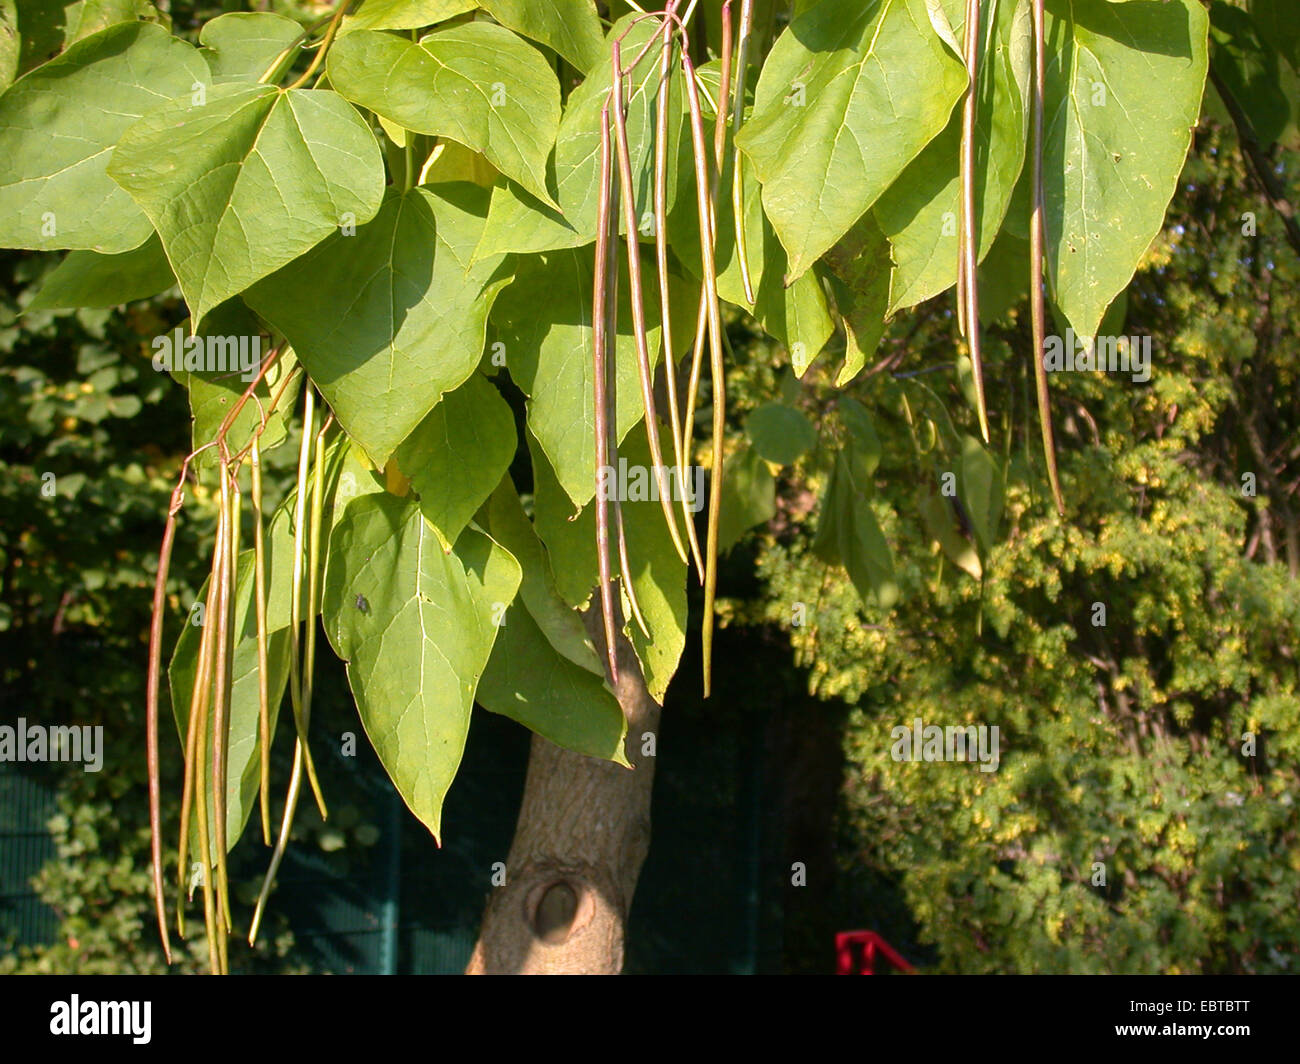 Indian bean tree (Catalpa bignonioides), branch with fruits Stock Photo